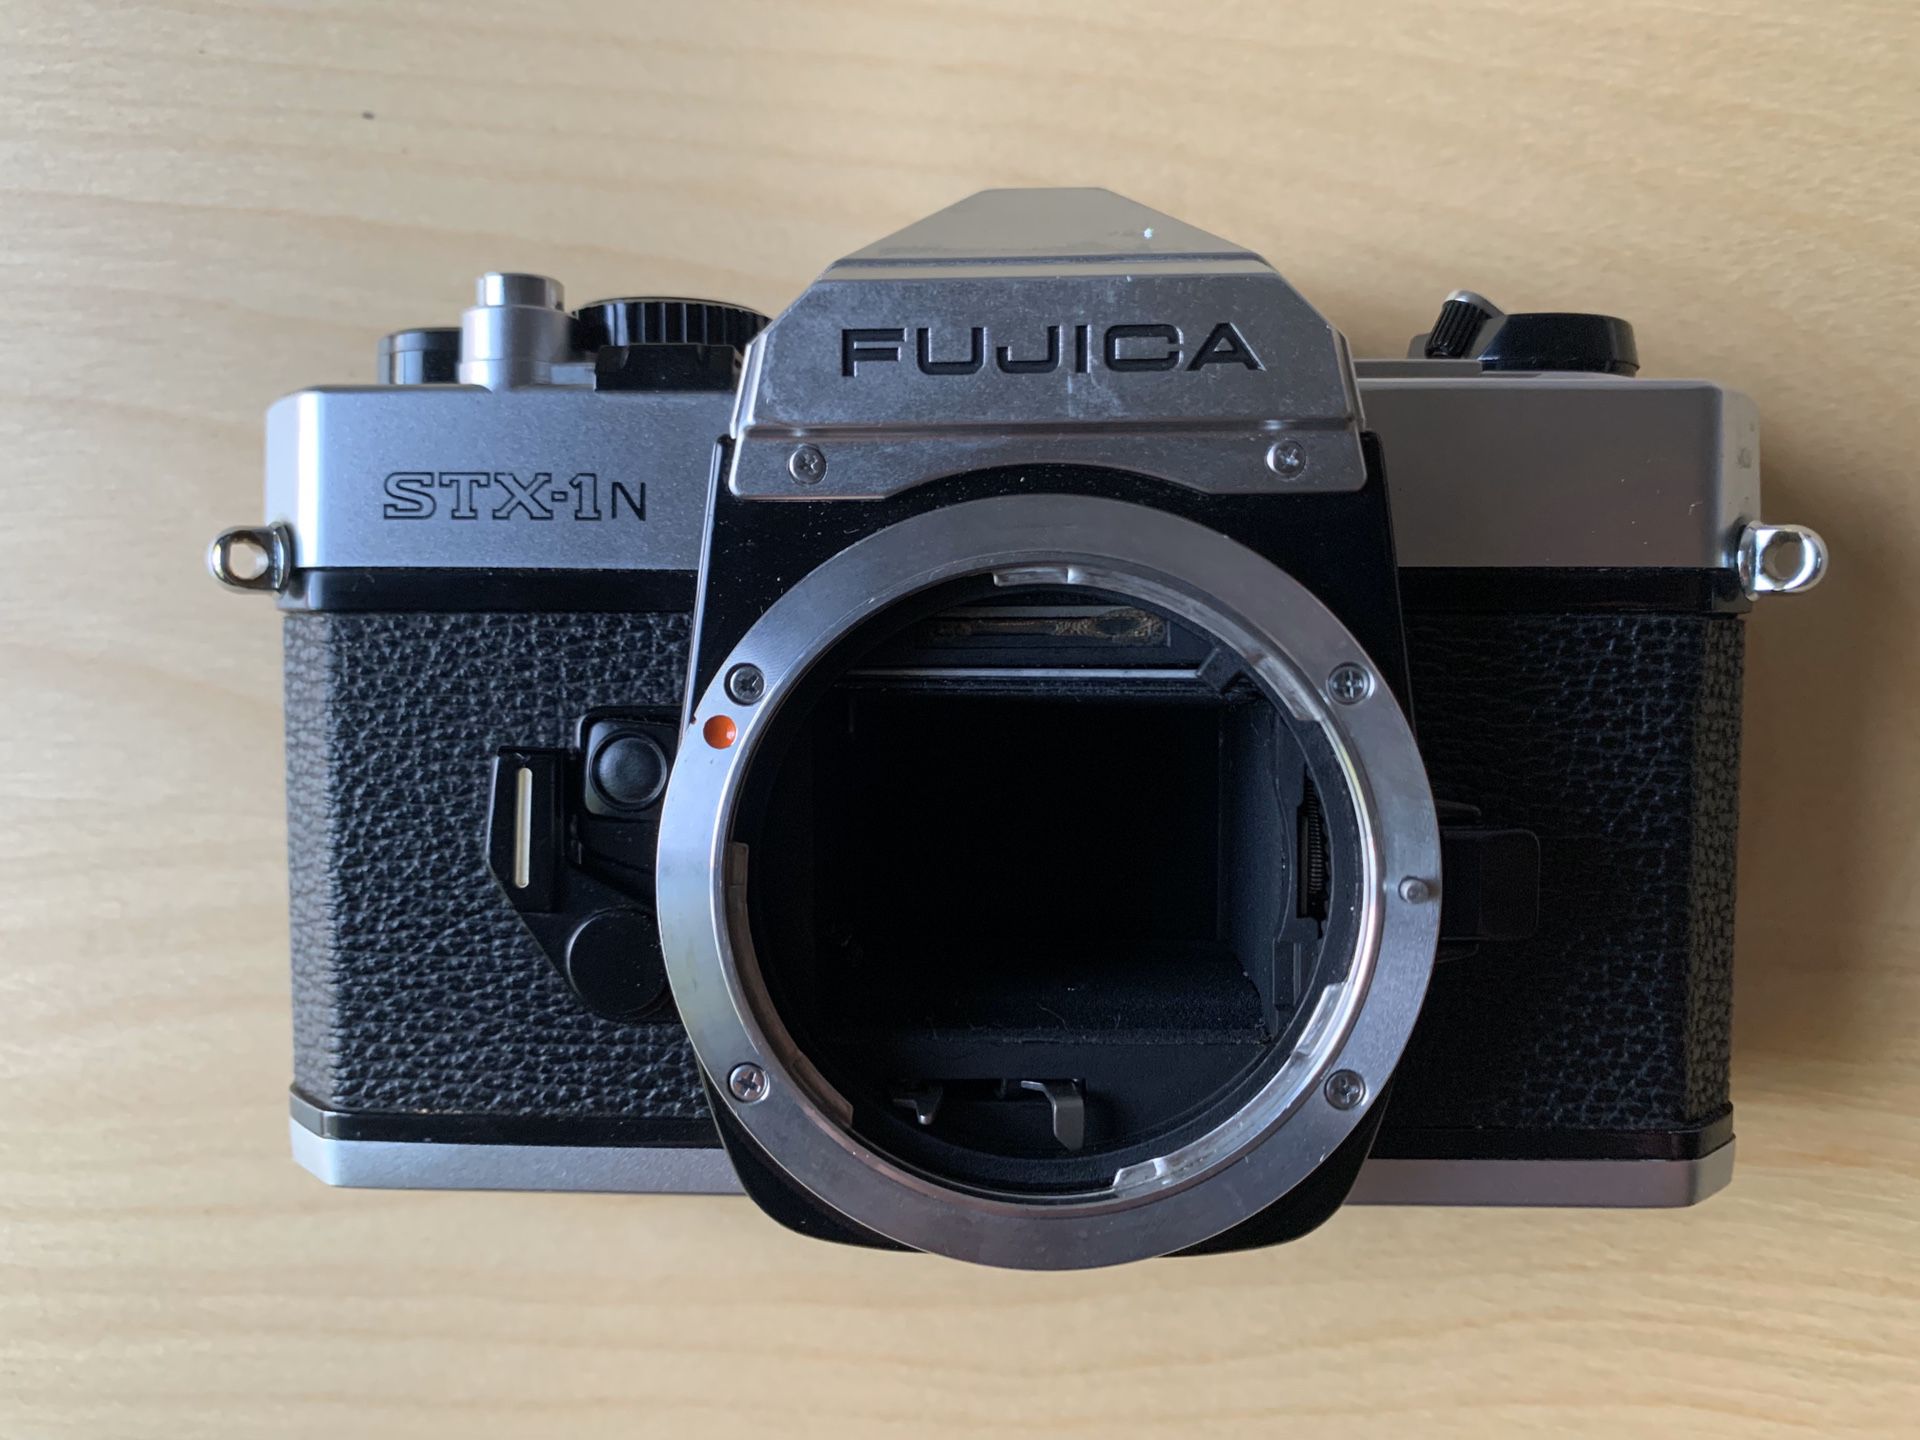 Fujica STX-1N, 35mm film camera